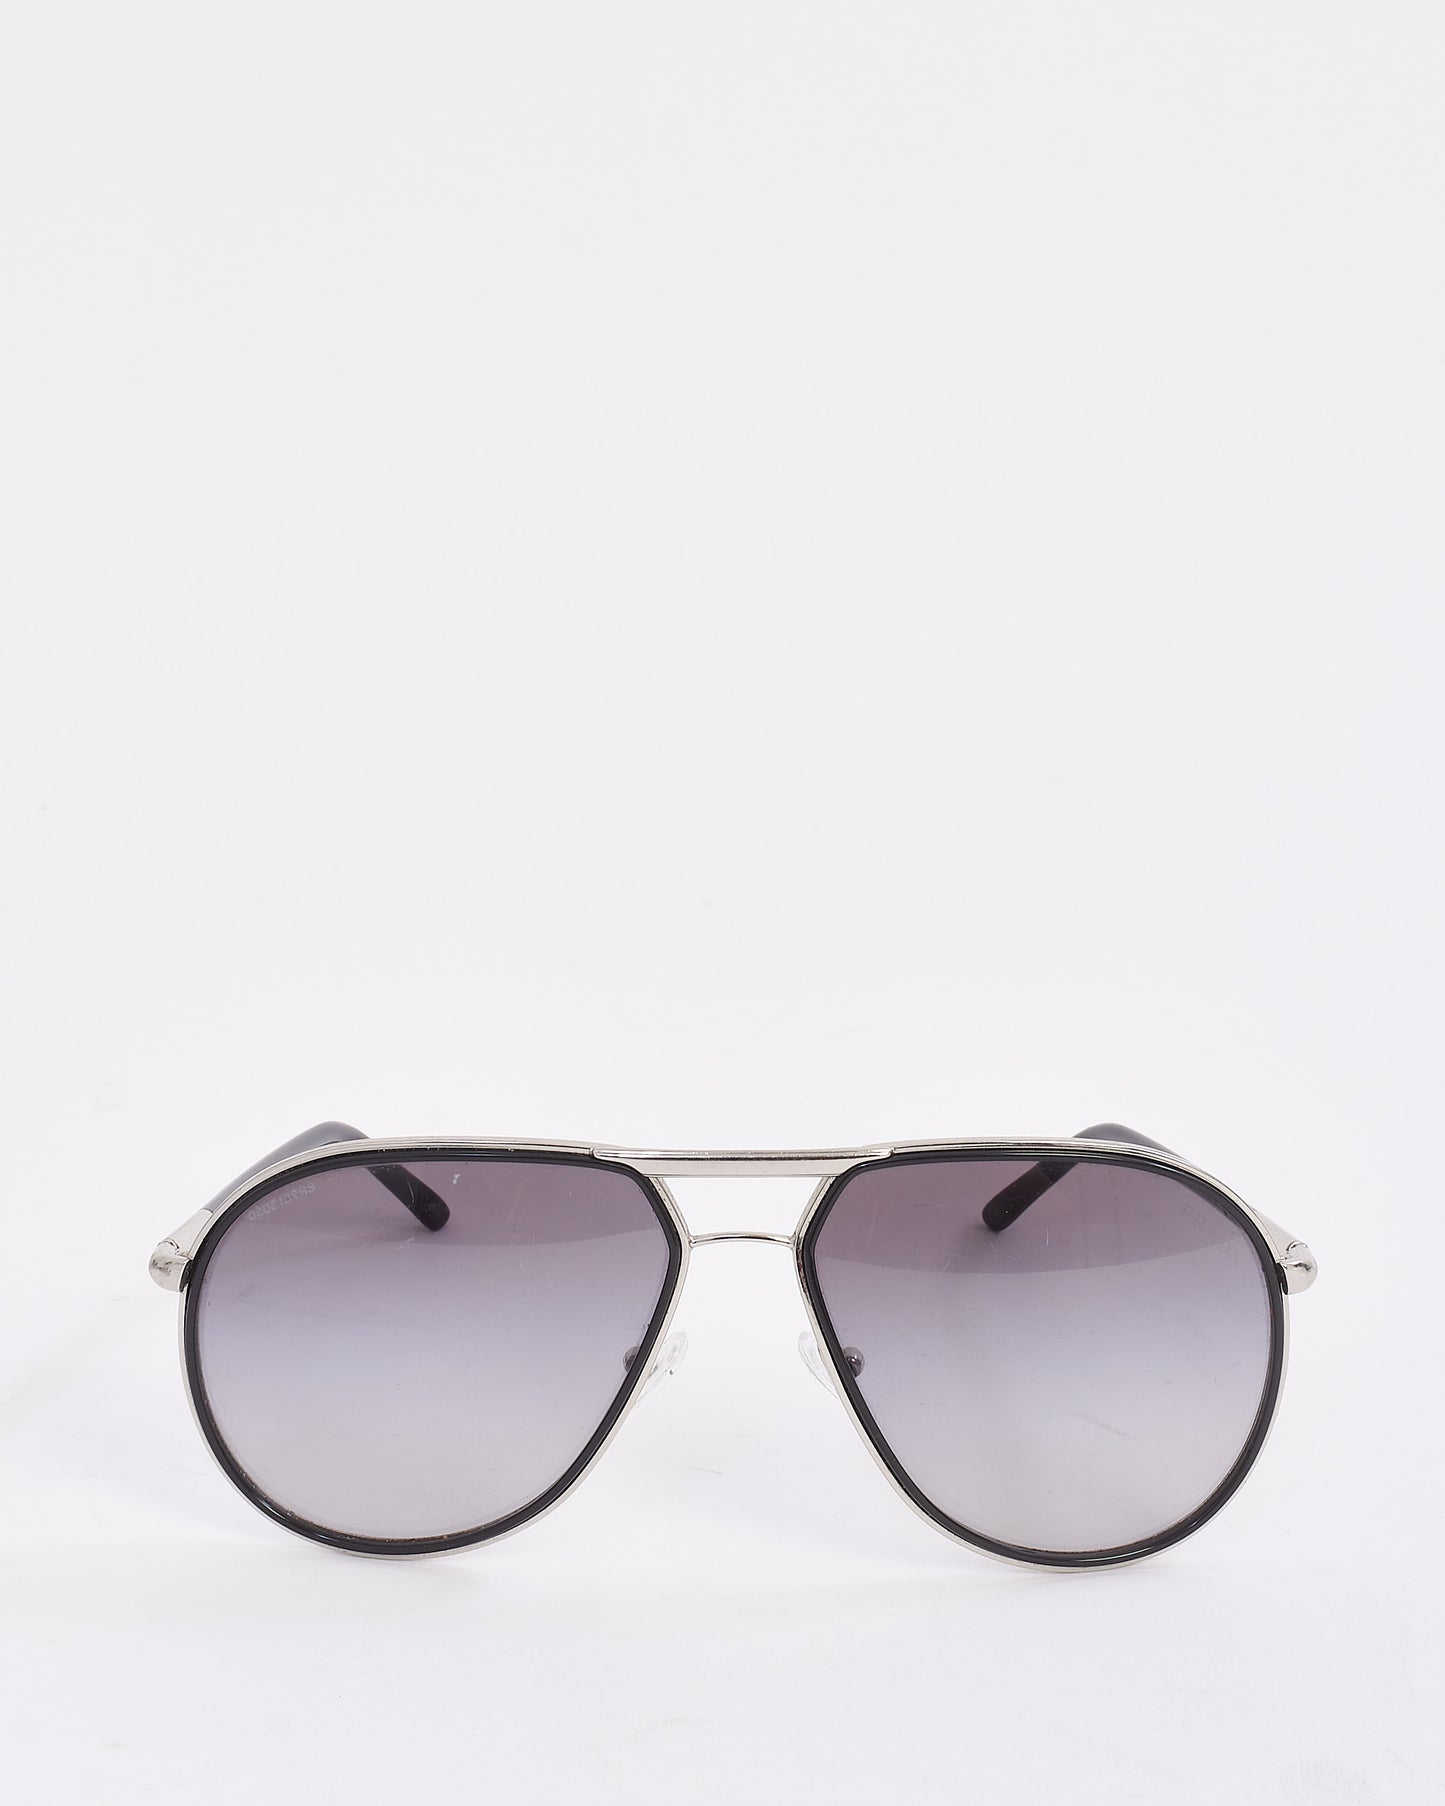 Prada Black and Silver Metal Aviator Sunglasses